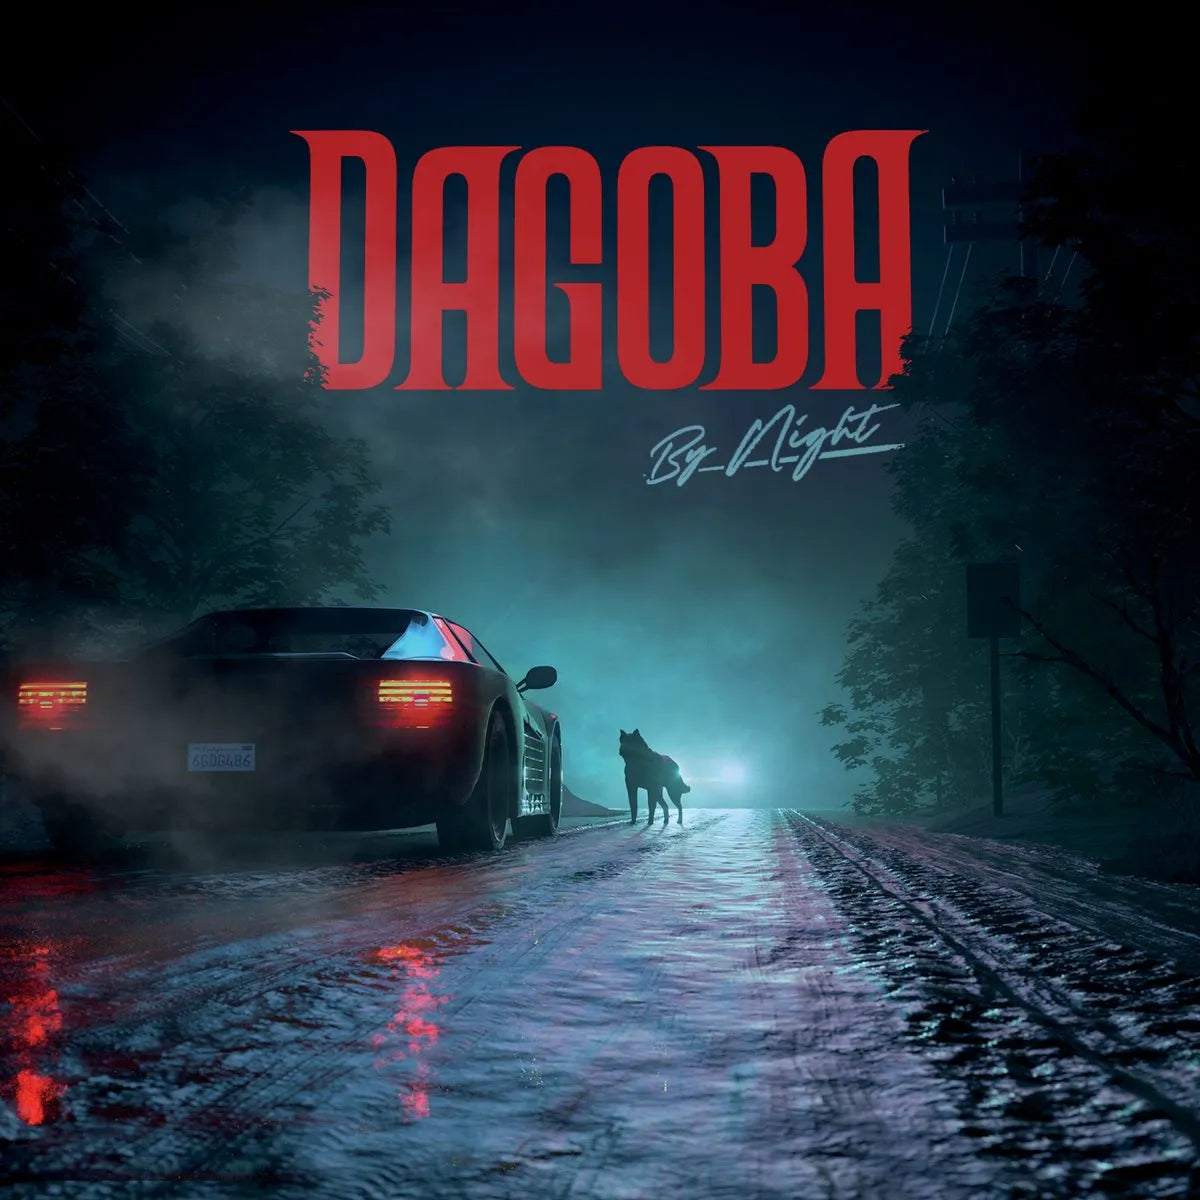 By Night Album by Dagoba